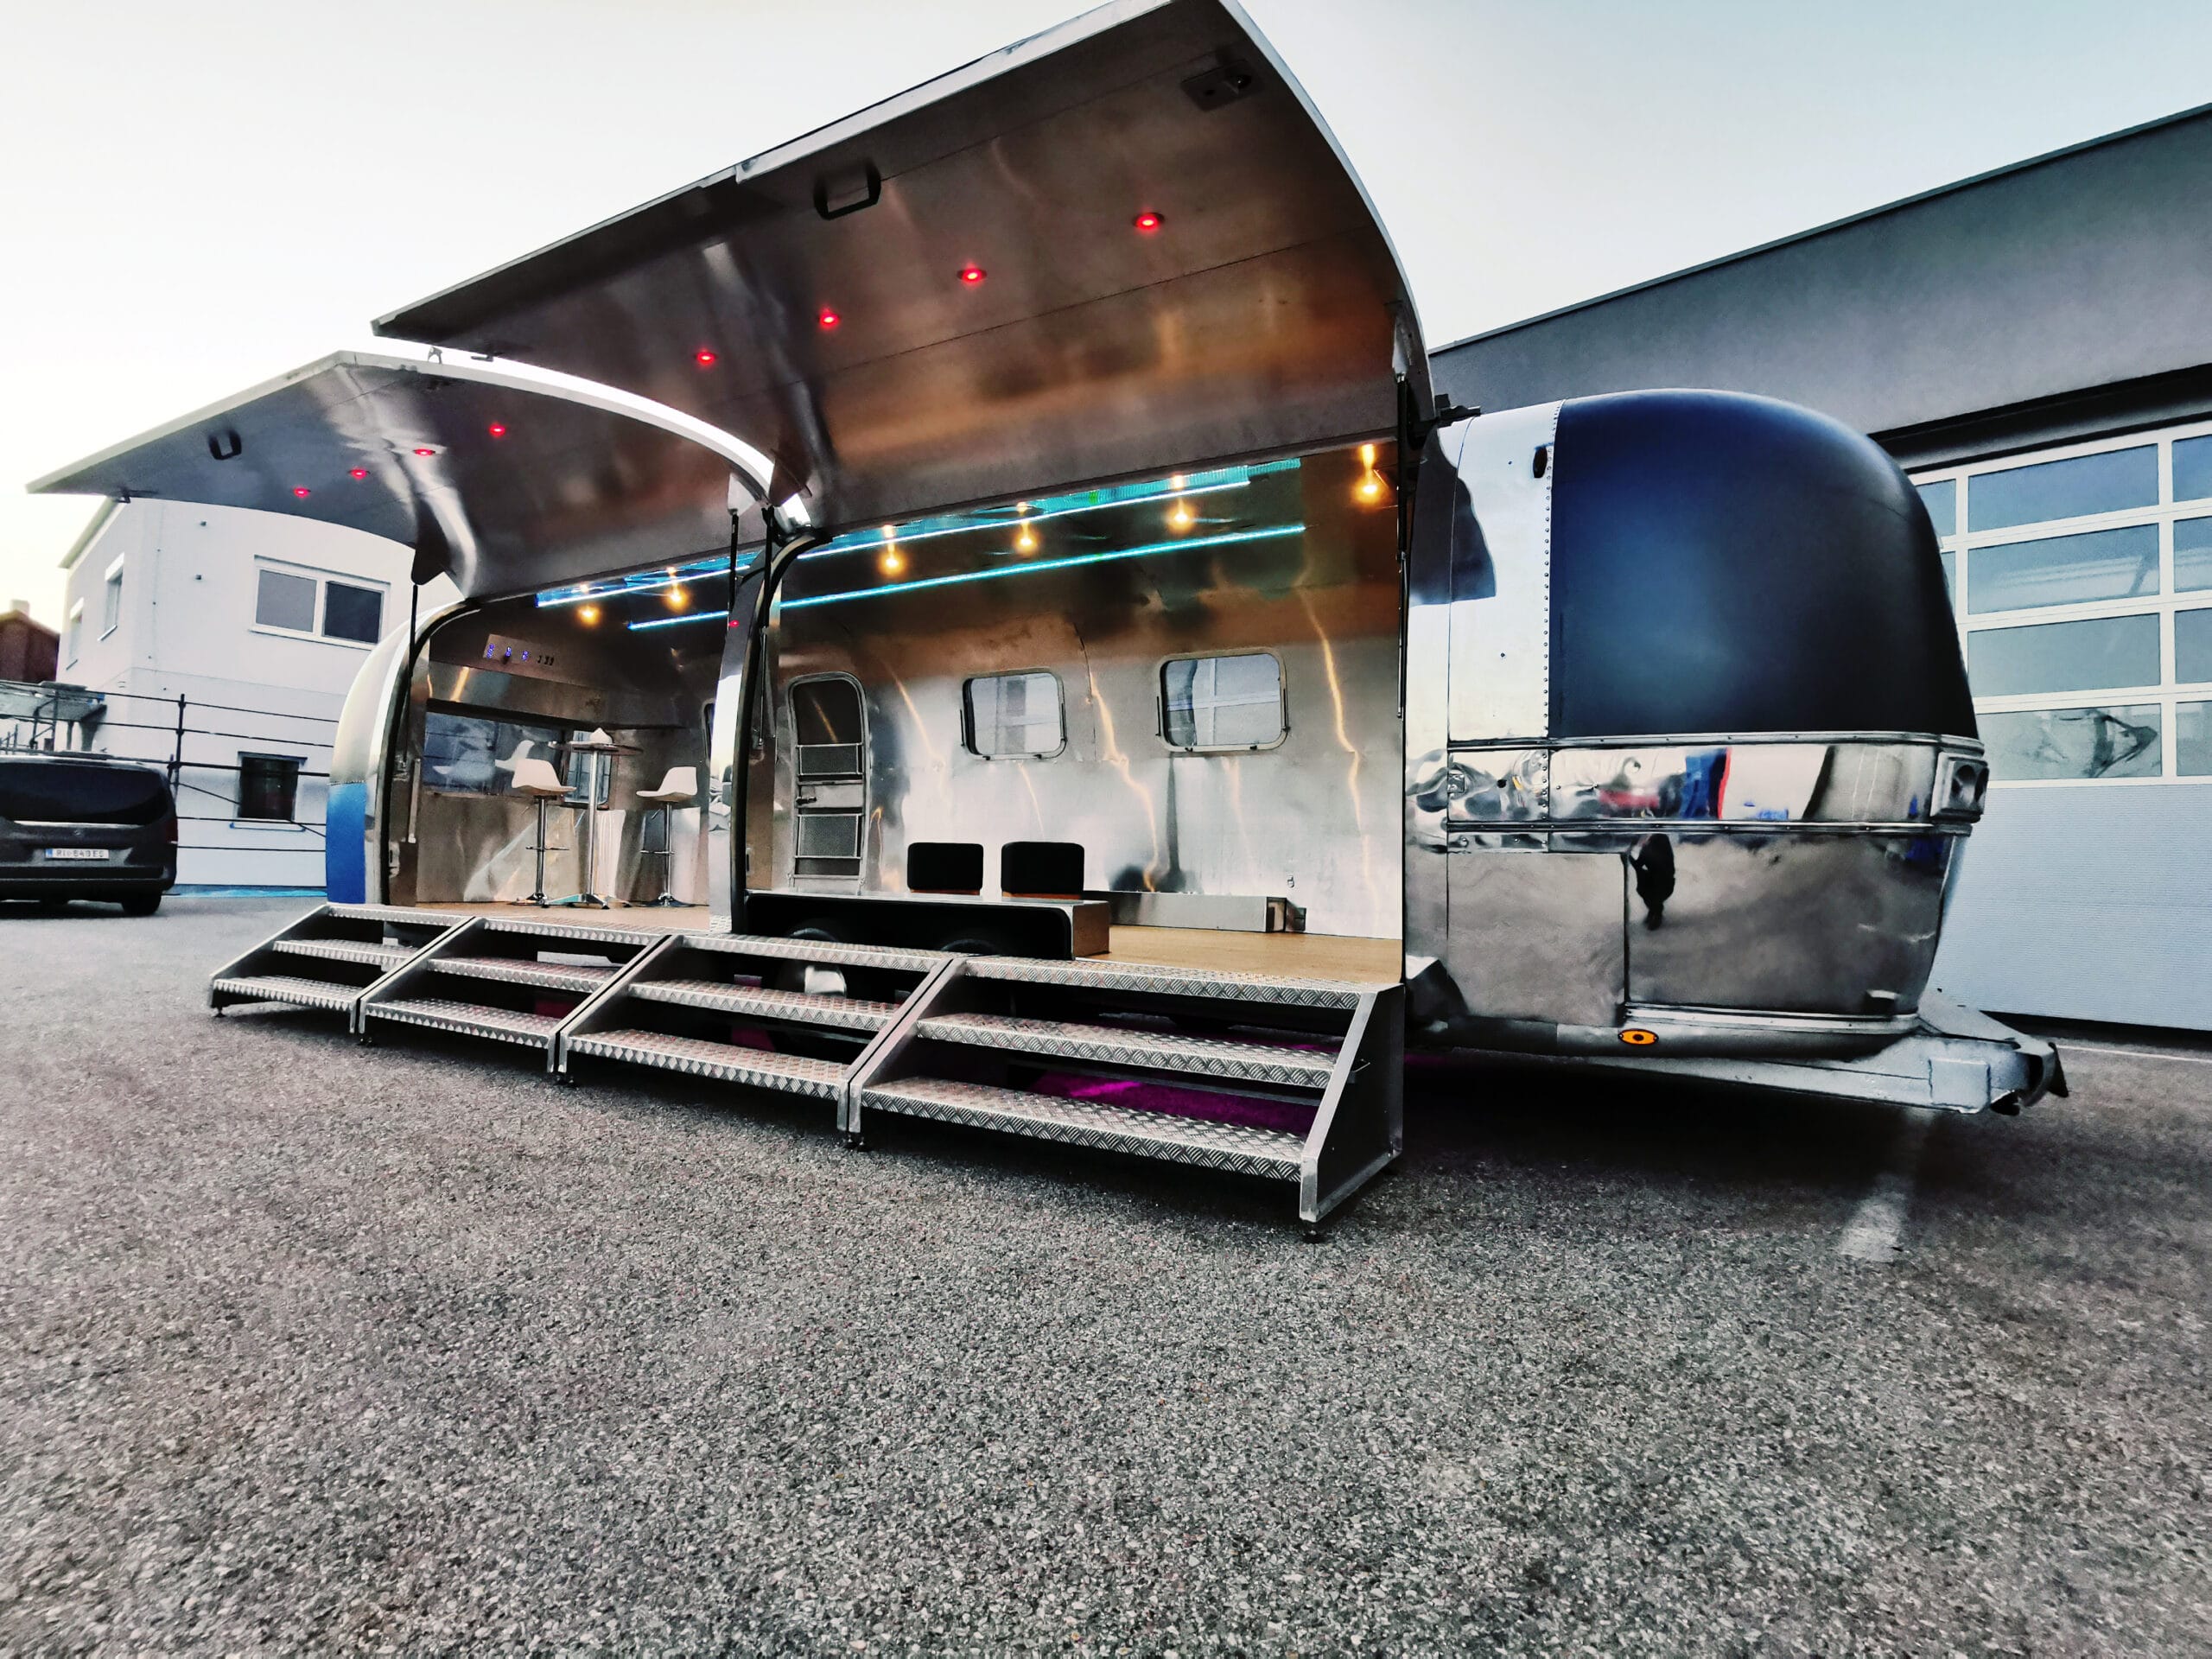 Airstream Mobile Gastro Stage Stage Bar اللوحات الخارجية Open Event Marketing Roadshow